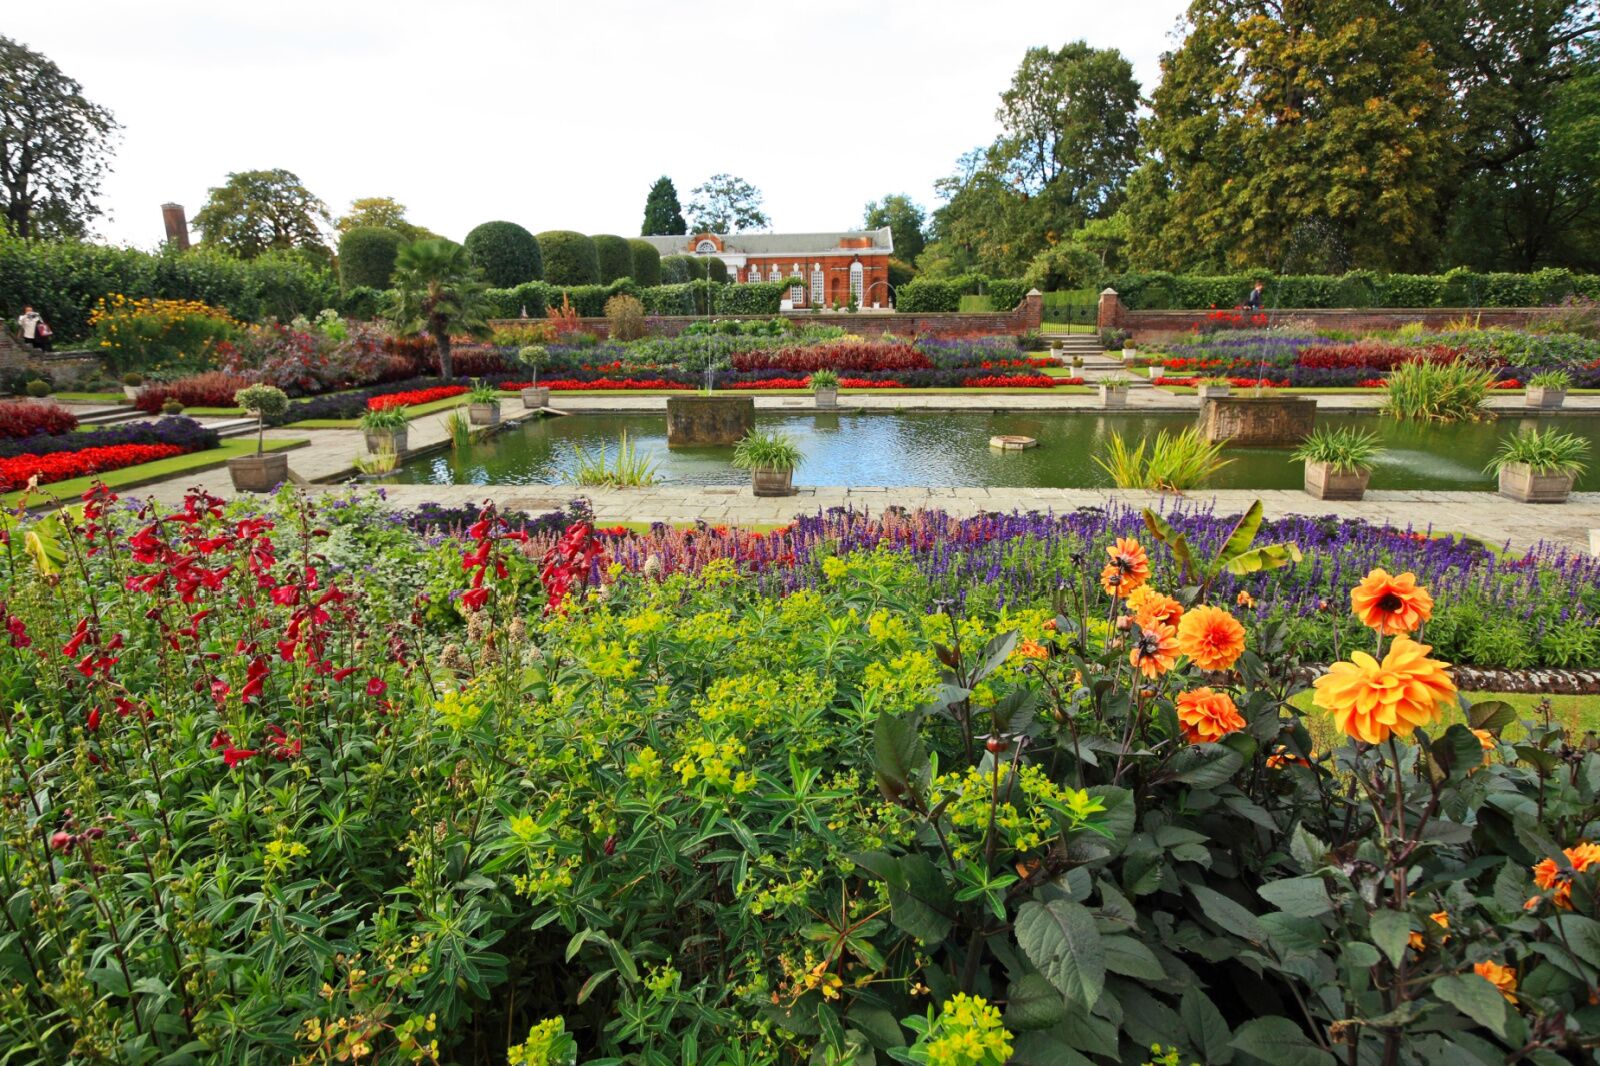 kensington gardens - parks in london